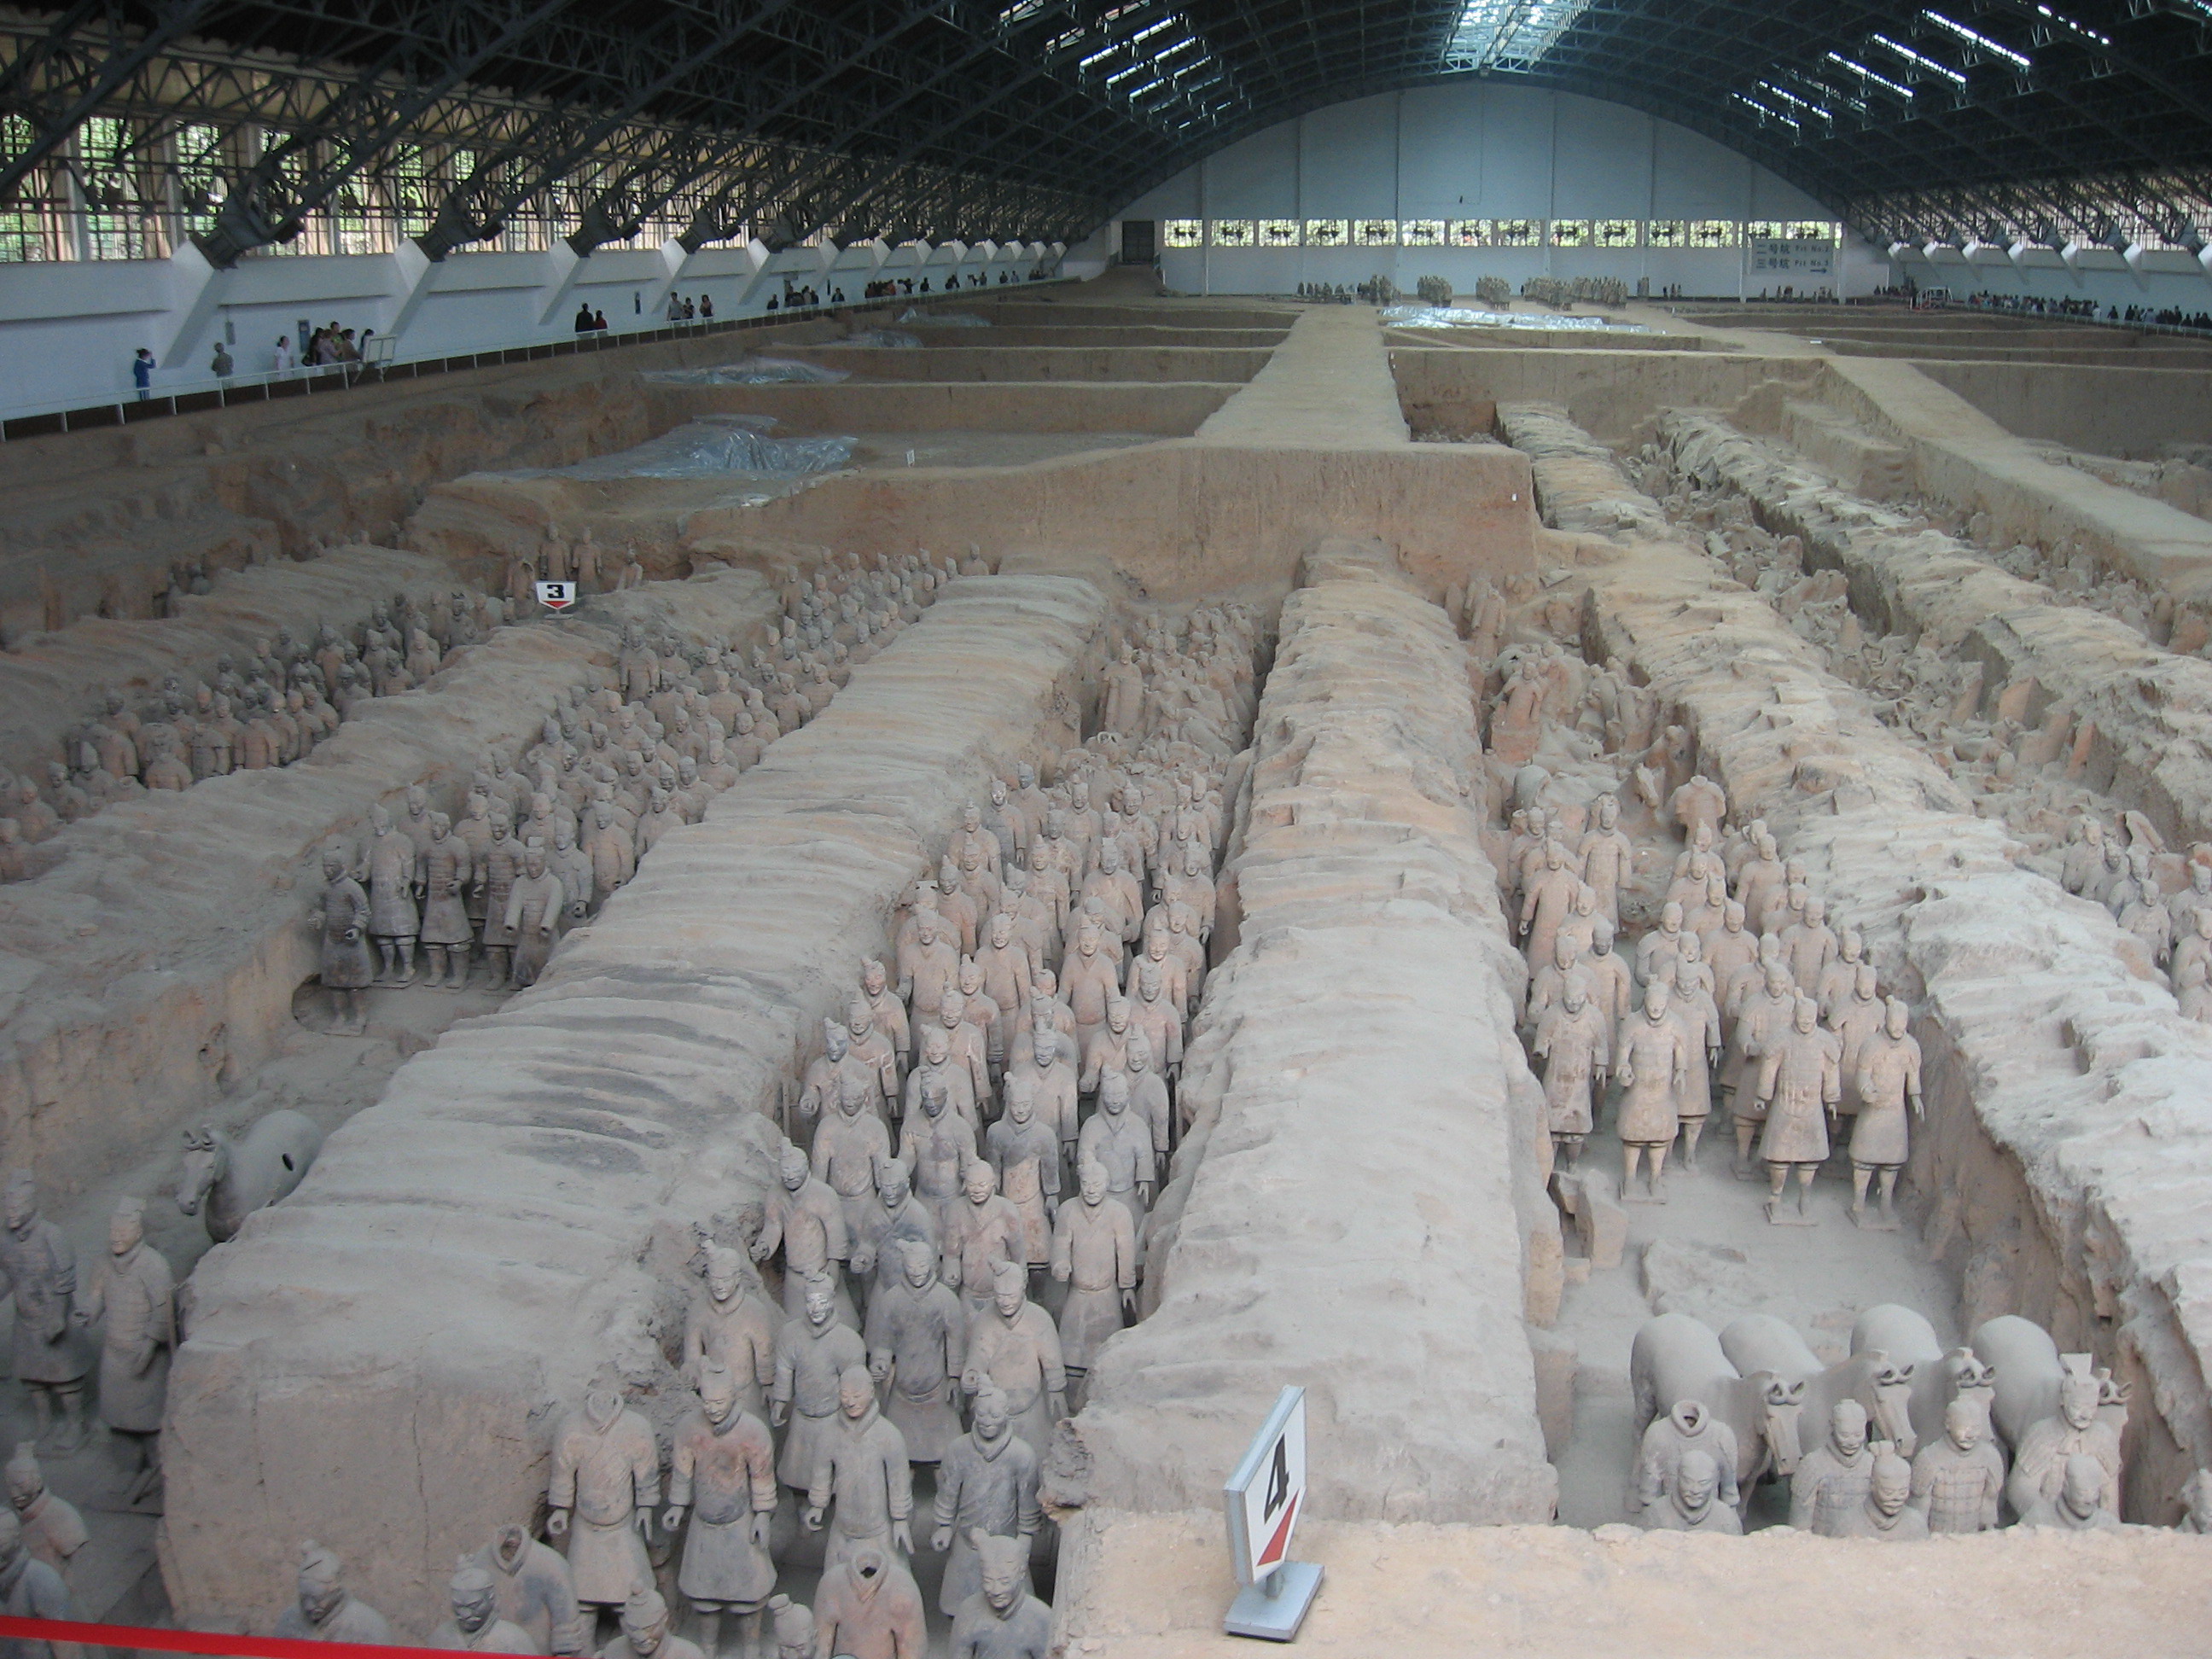 Terracotta Army China باز هم به تعداد سربازان ارتش سفالی 2000 هزار ساله چینی افزوده شد  | تاریخ باستان تمدن عکسهای تاریخی